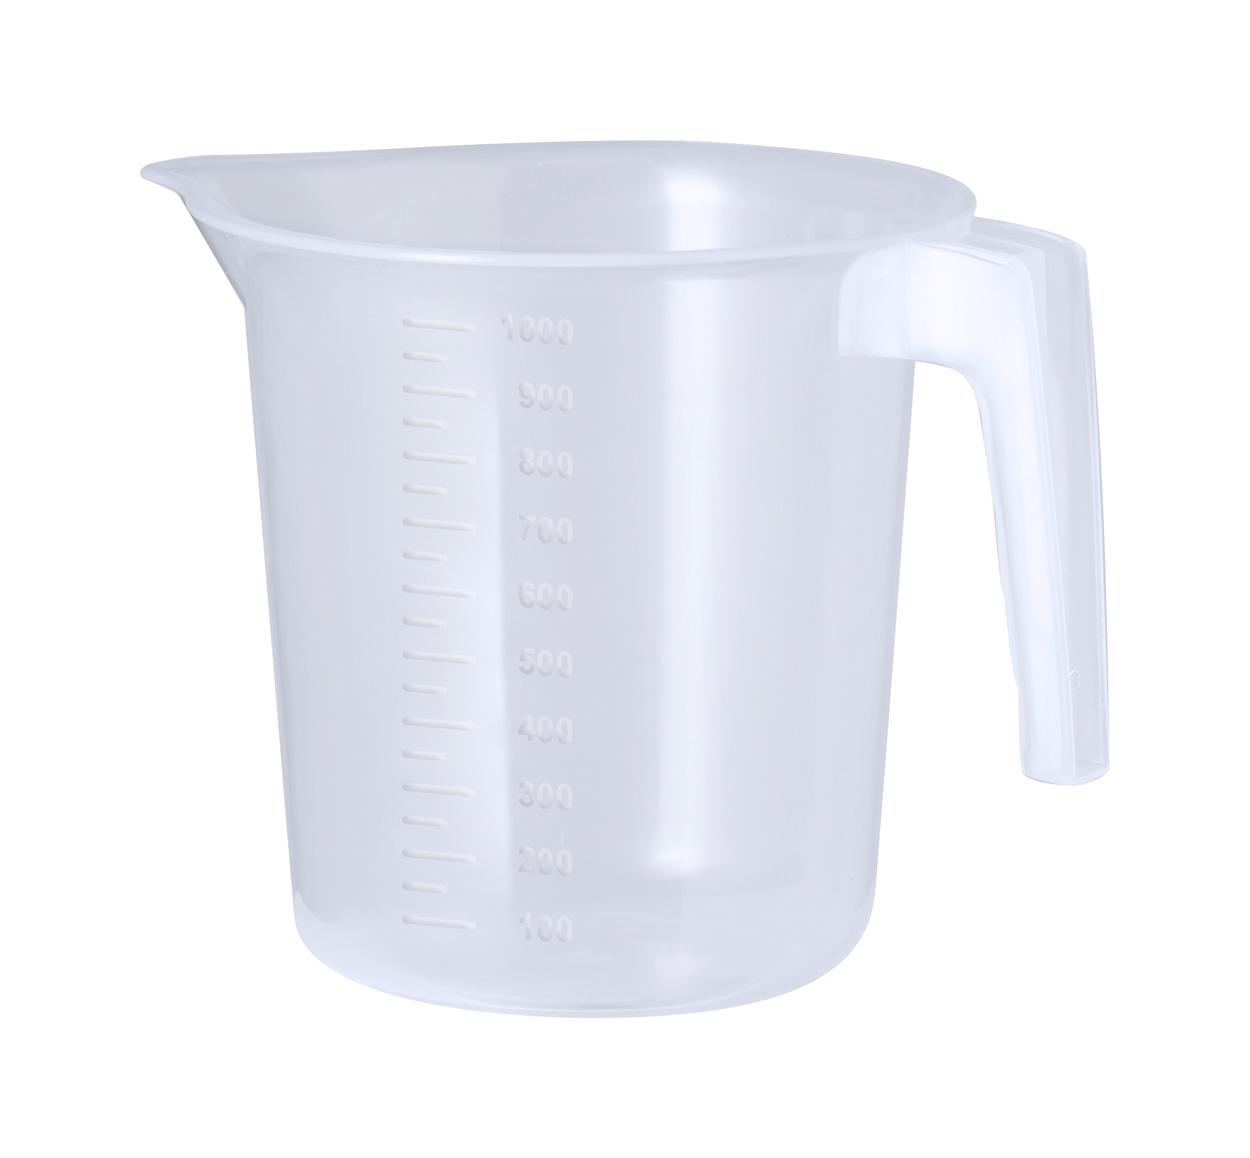 Suwan measuring cup - Transparente